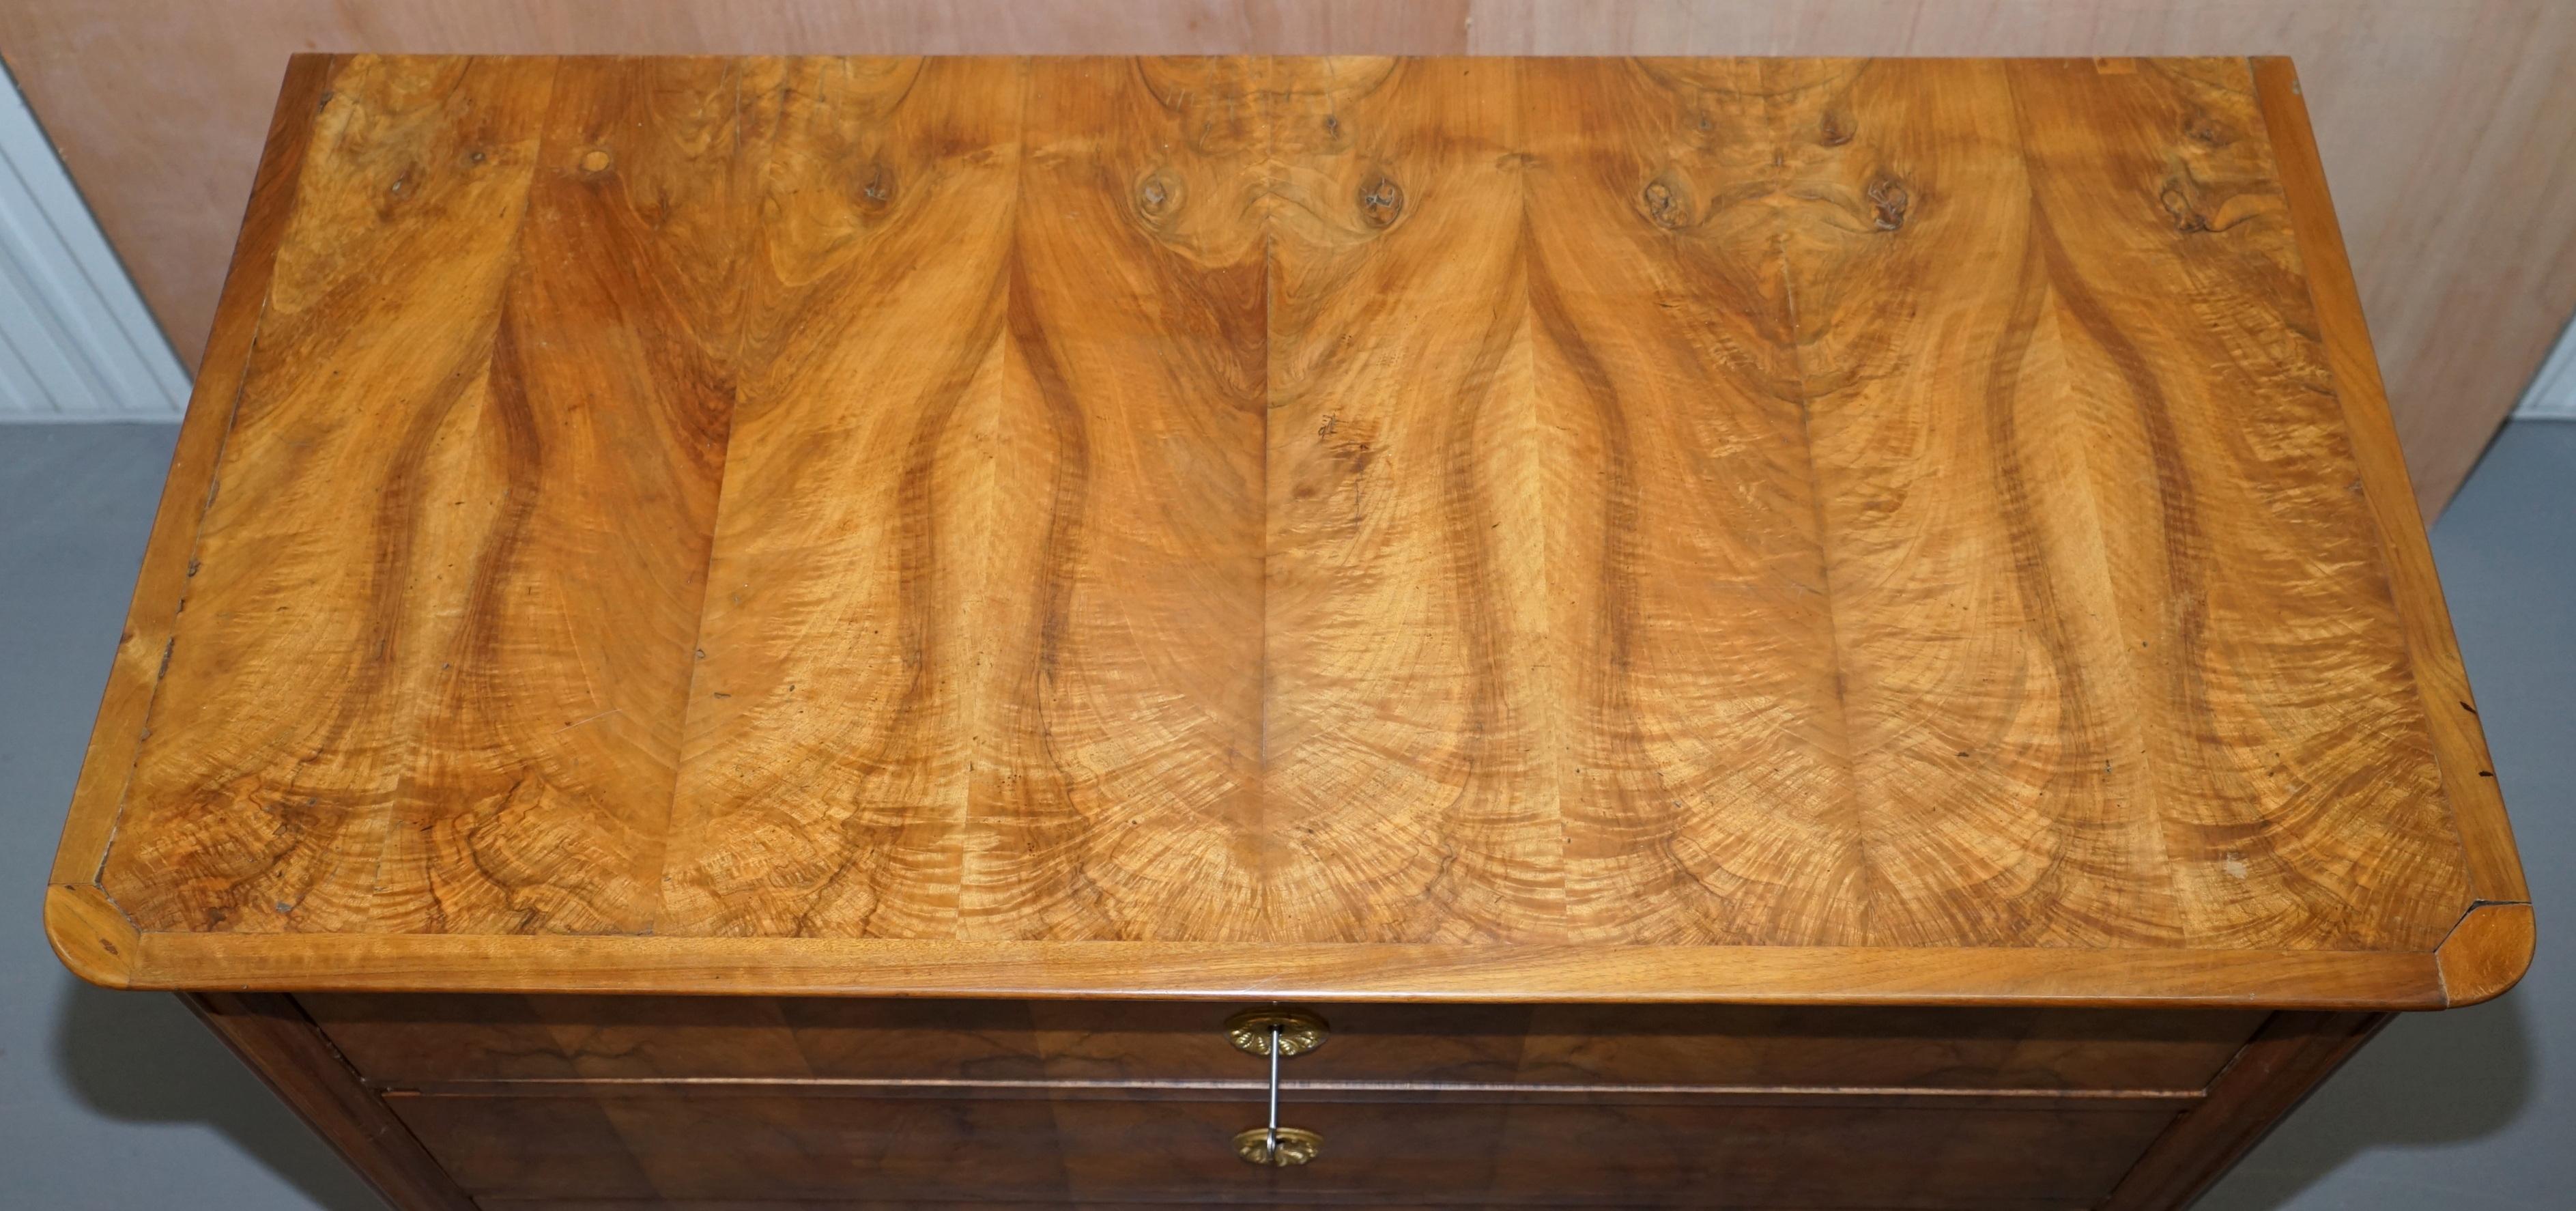 Huge 19th Century Walnut Biedermeier Chest of Drawers Drop Front Desk Secretaire (Handgefertigt)